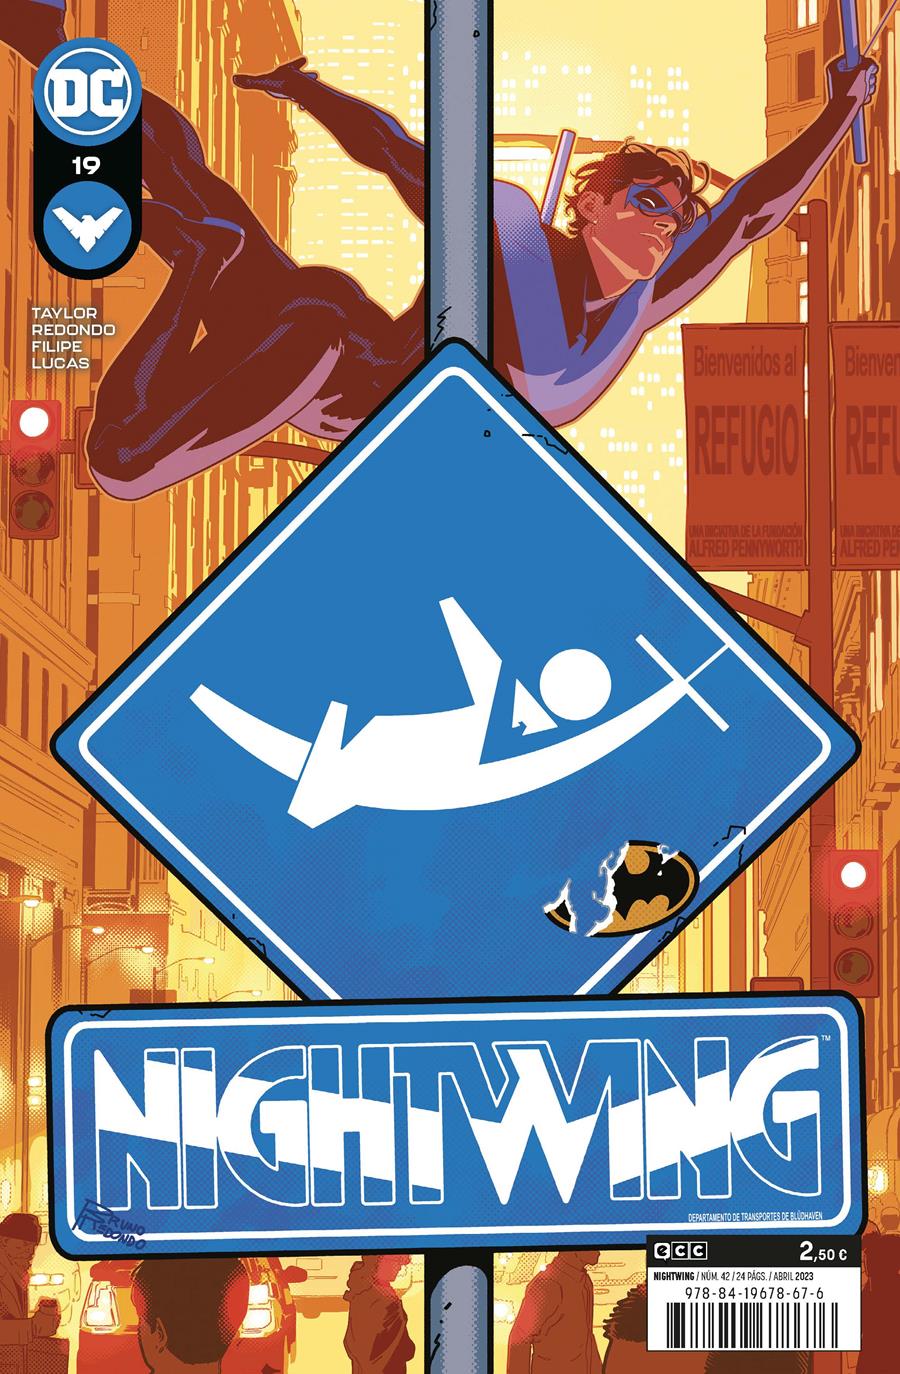 Nightwing núm. 19 | N0423-ECC13 | Bruno Redondo / Tom Taylor | Terra de Còmic - Tu tienda de cómics online especializada en cómics, manga y merchandising